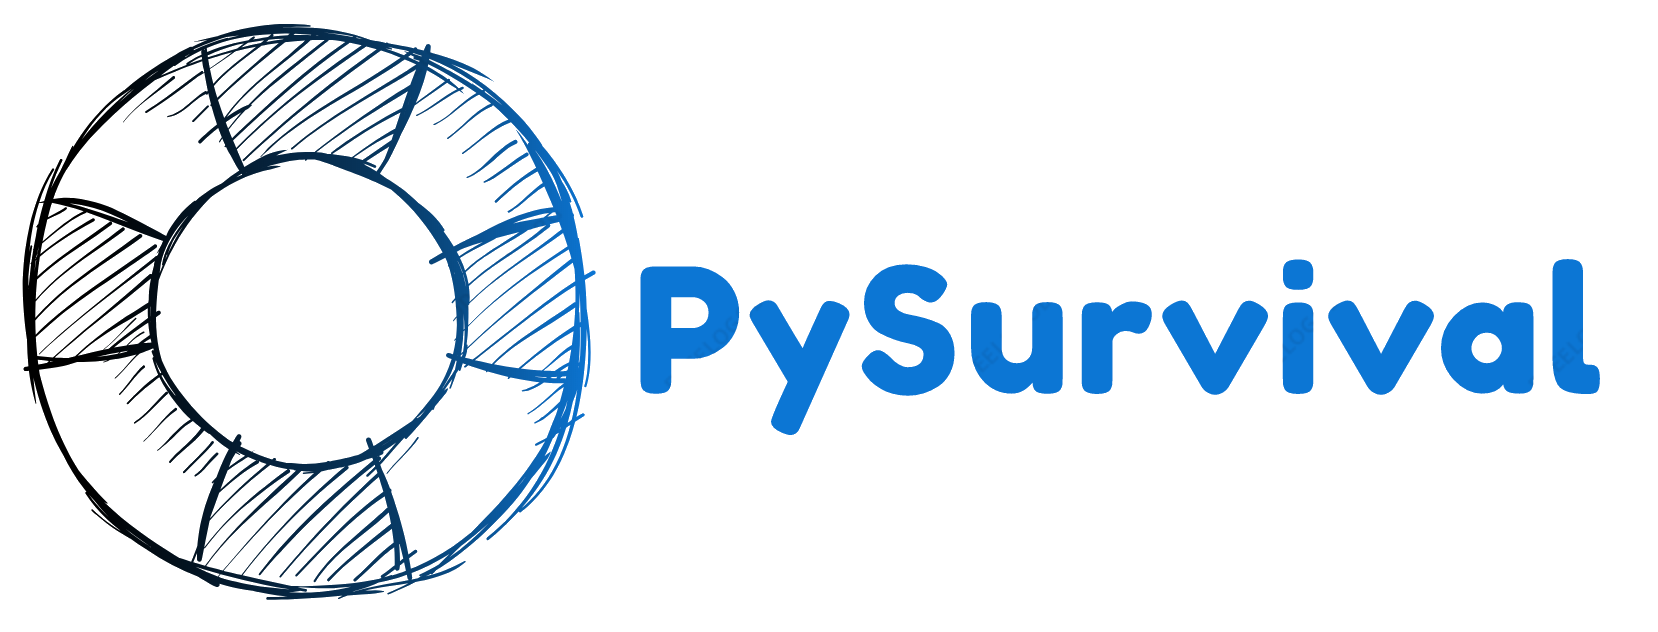 PySurvival logo